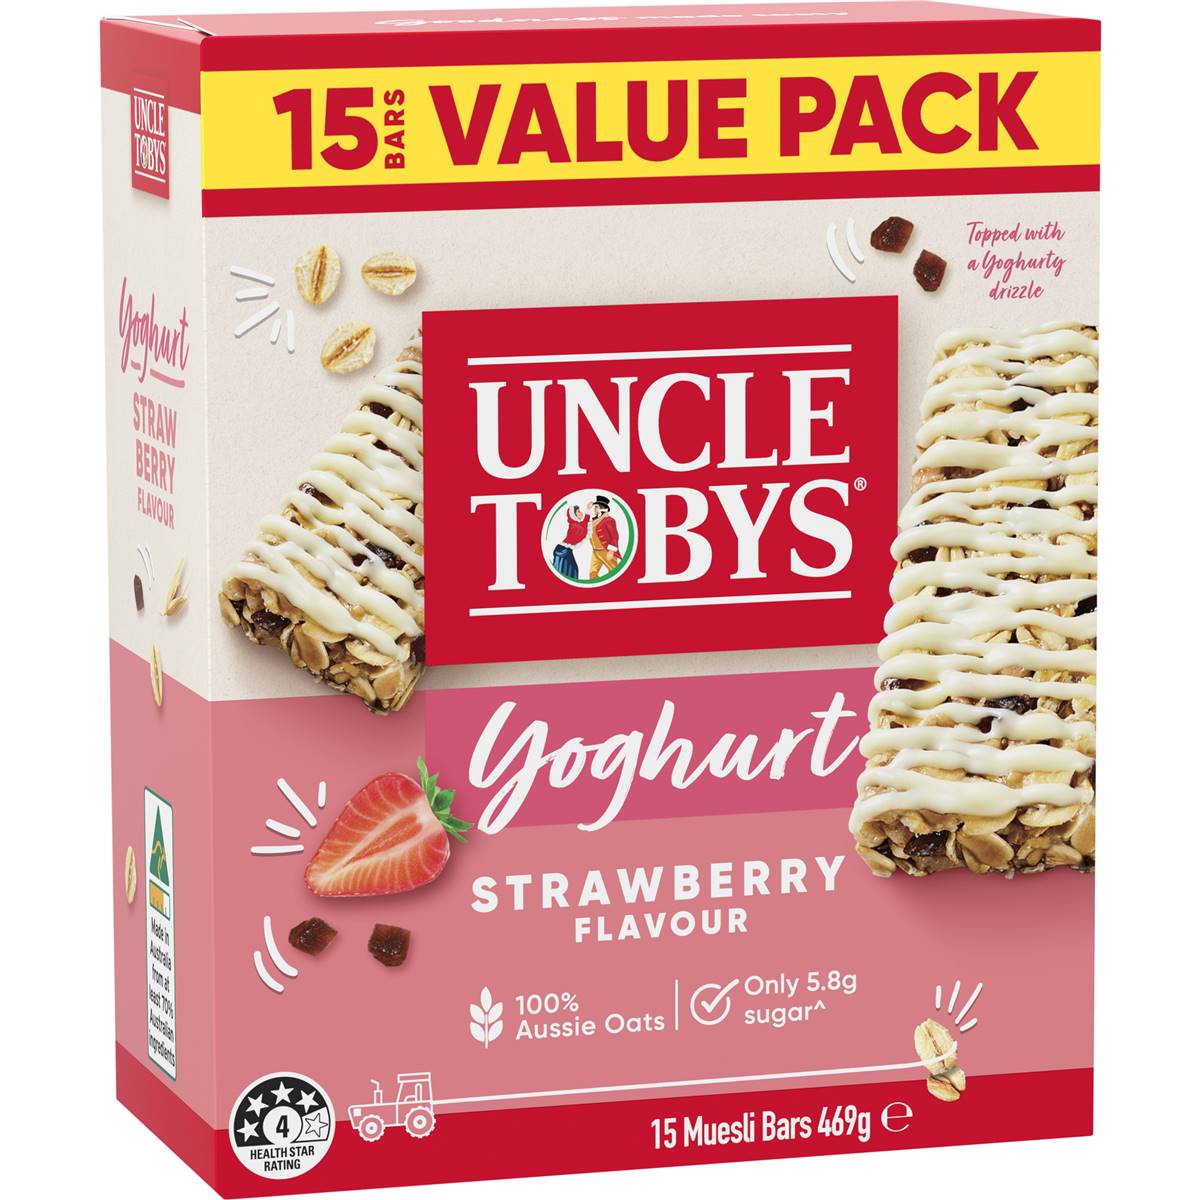 Calories in Uncle Tobys Yoghurt Muesli Bars Strawberry